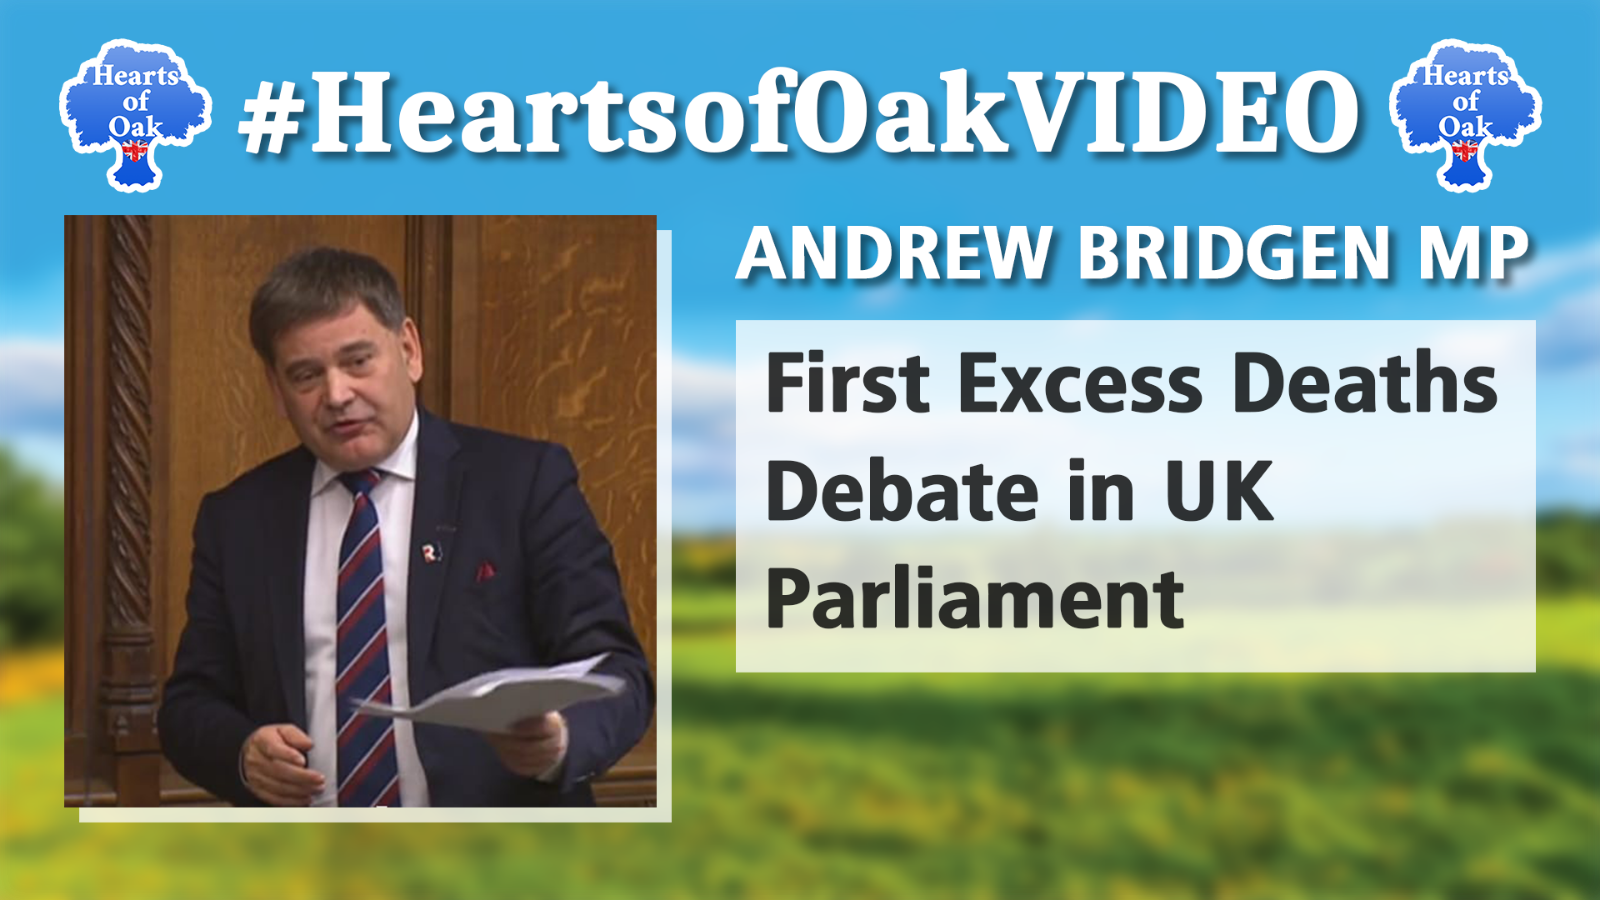 Andrew Bridgen MP - First Excess Deaths Debate in UK Parliament